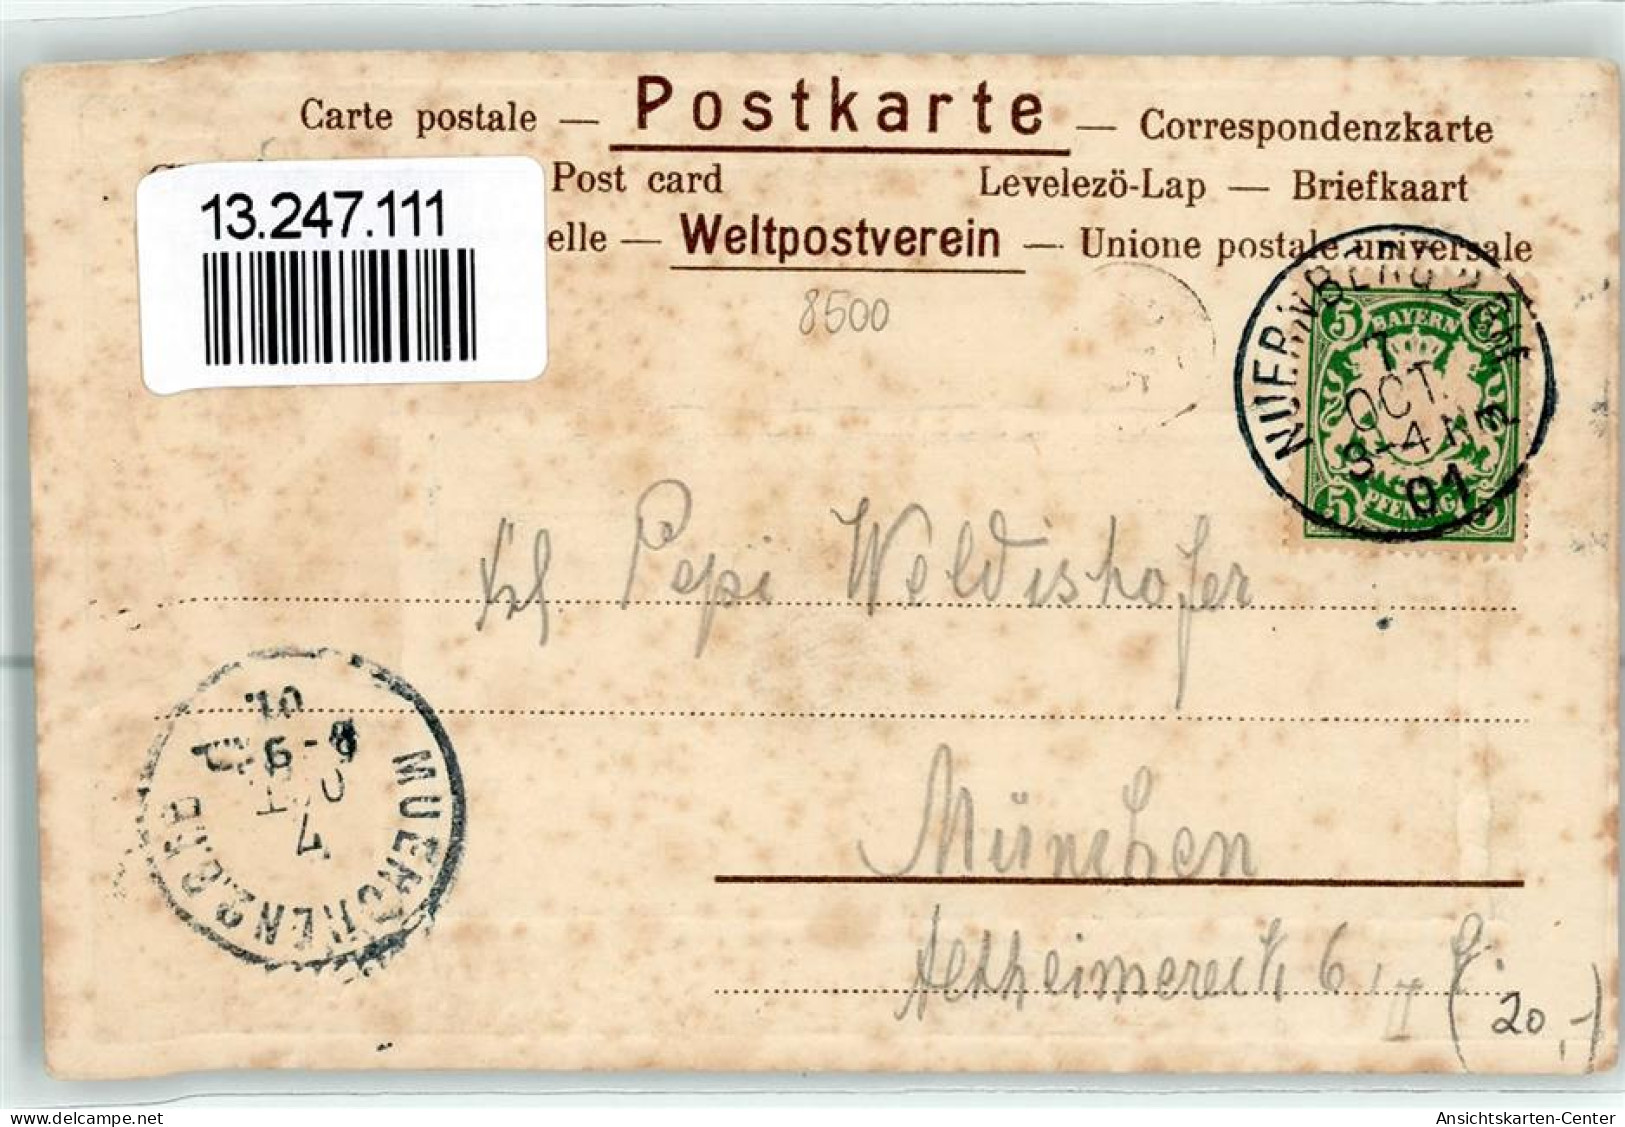 13247111 - Nuernberg - Nürnberg